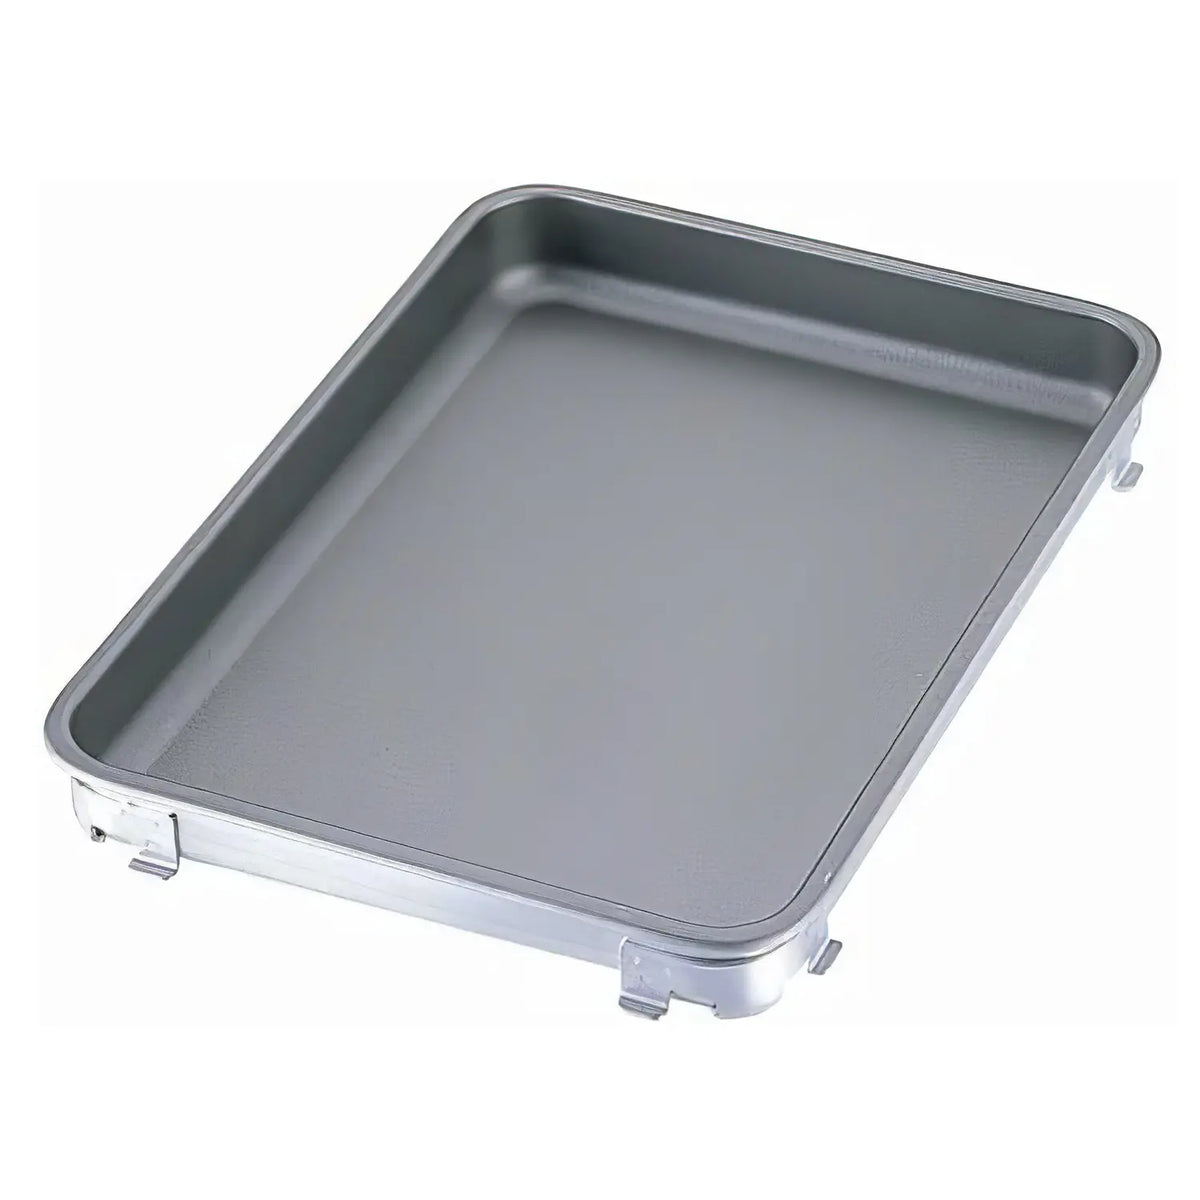 IKD Aluminum Fluororesin-coated Tray for Gyoza &amp; Perishables